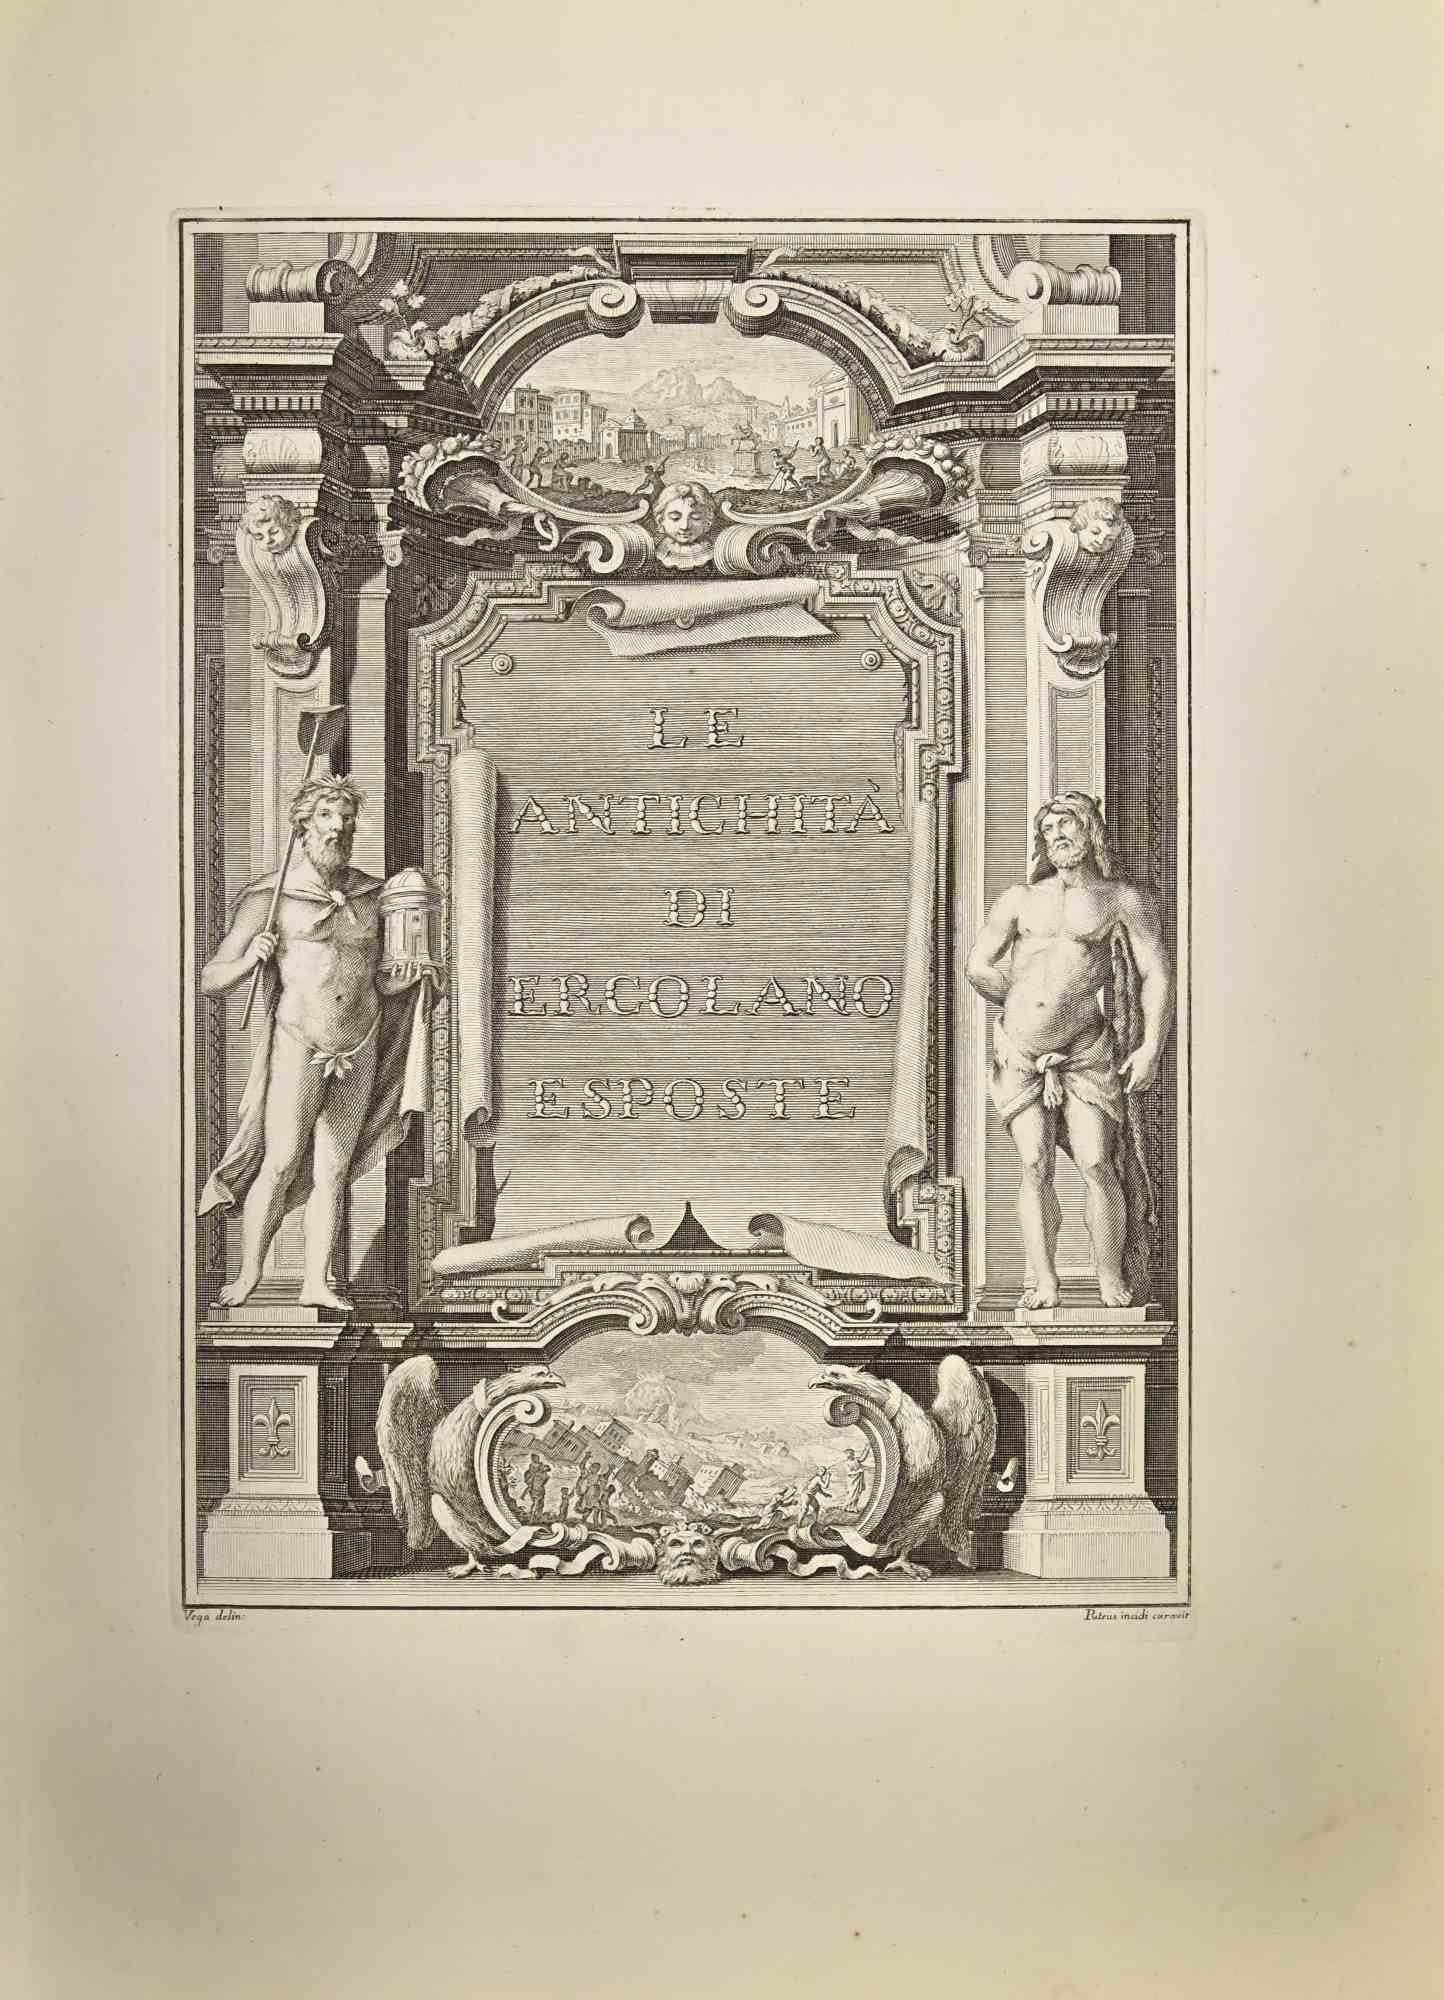 Francesco Lavega Figurative Print - Frontispiece of Antiquities of Herculaneum - Etching by F. Lavega - 18th Century